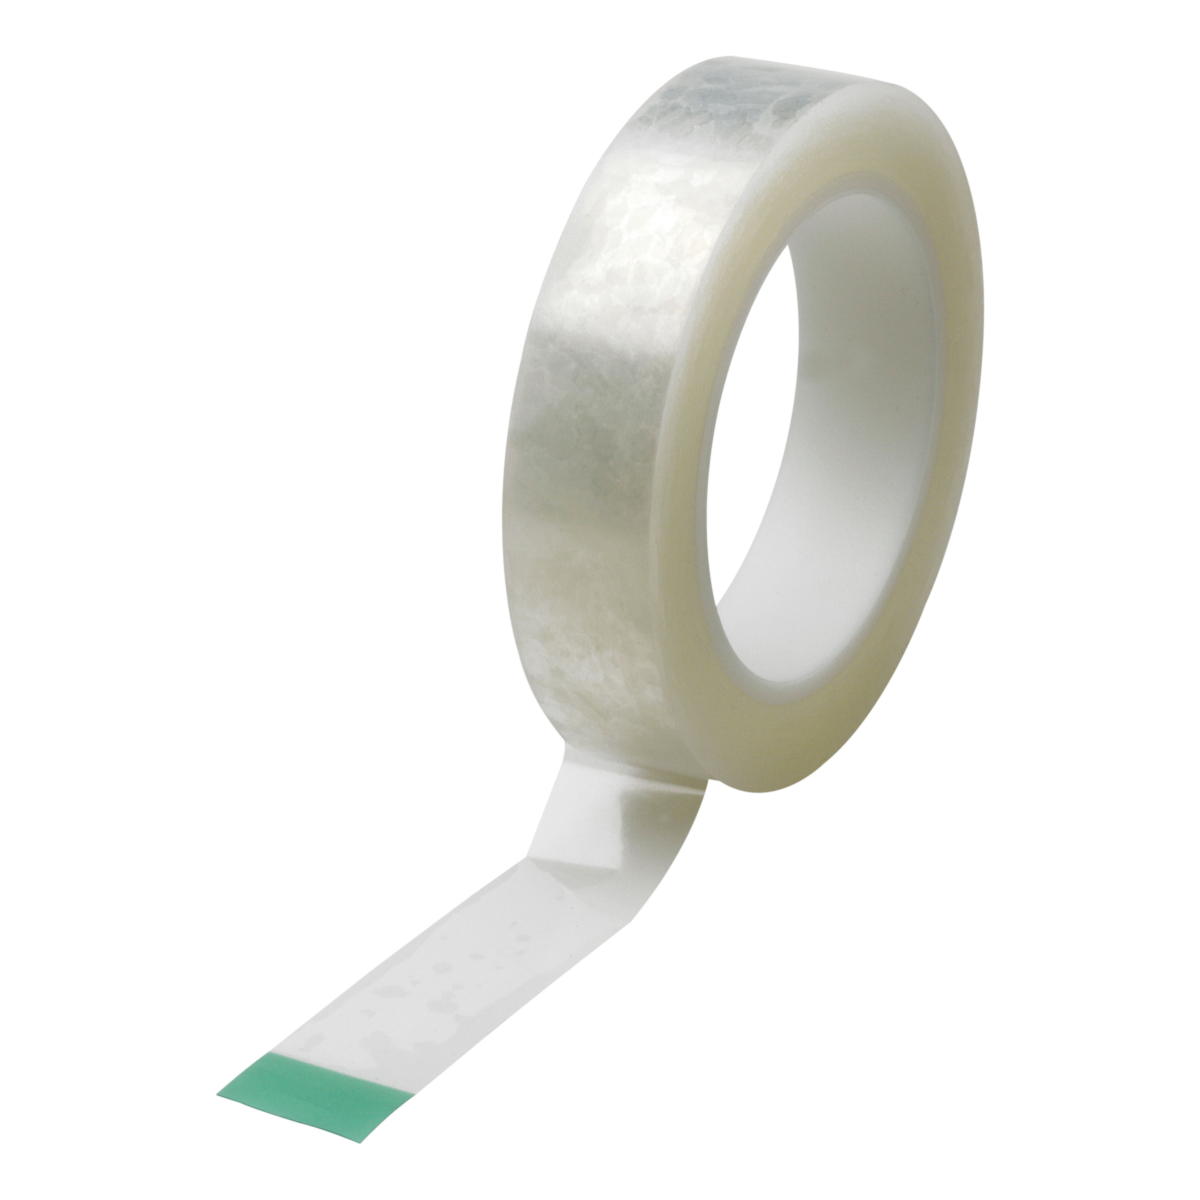 TEROSON TAPE DOUBLE SIDED – tape - Henkel Adhesives